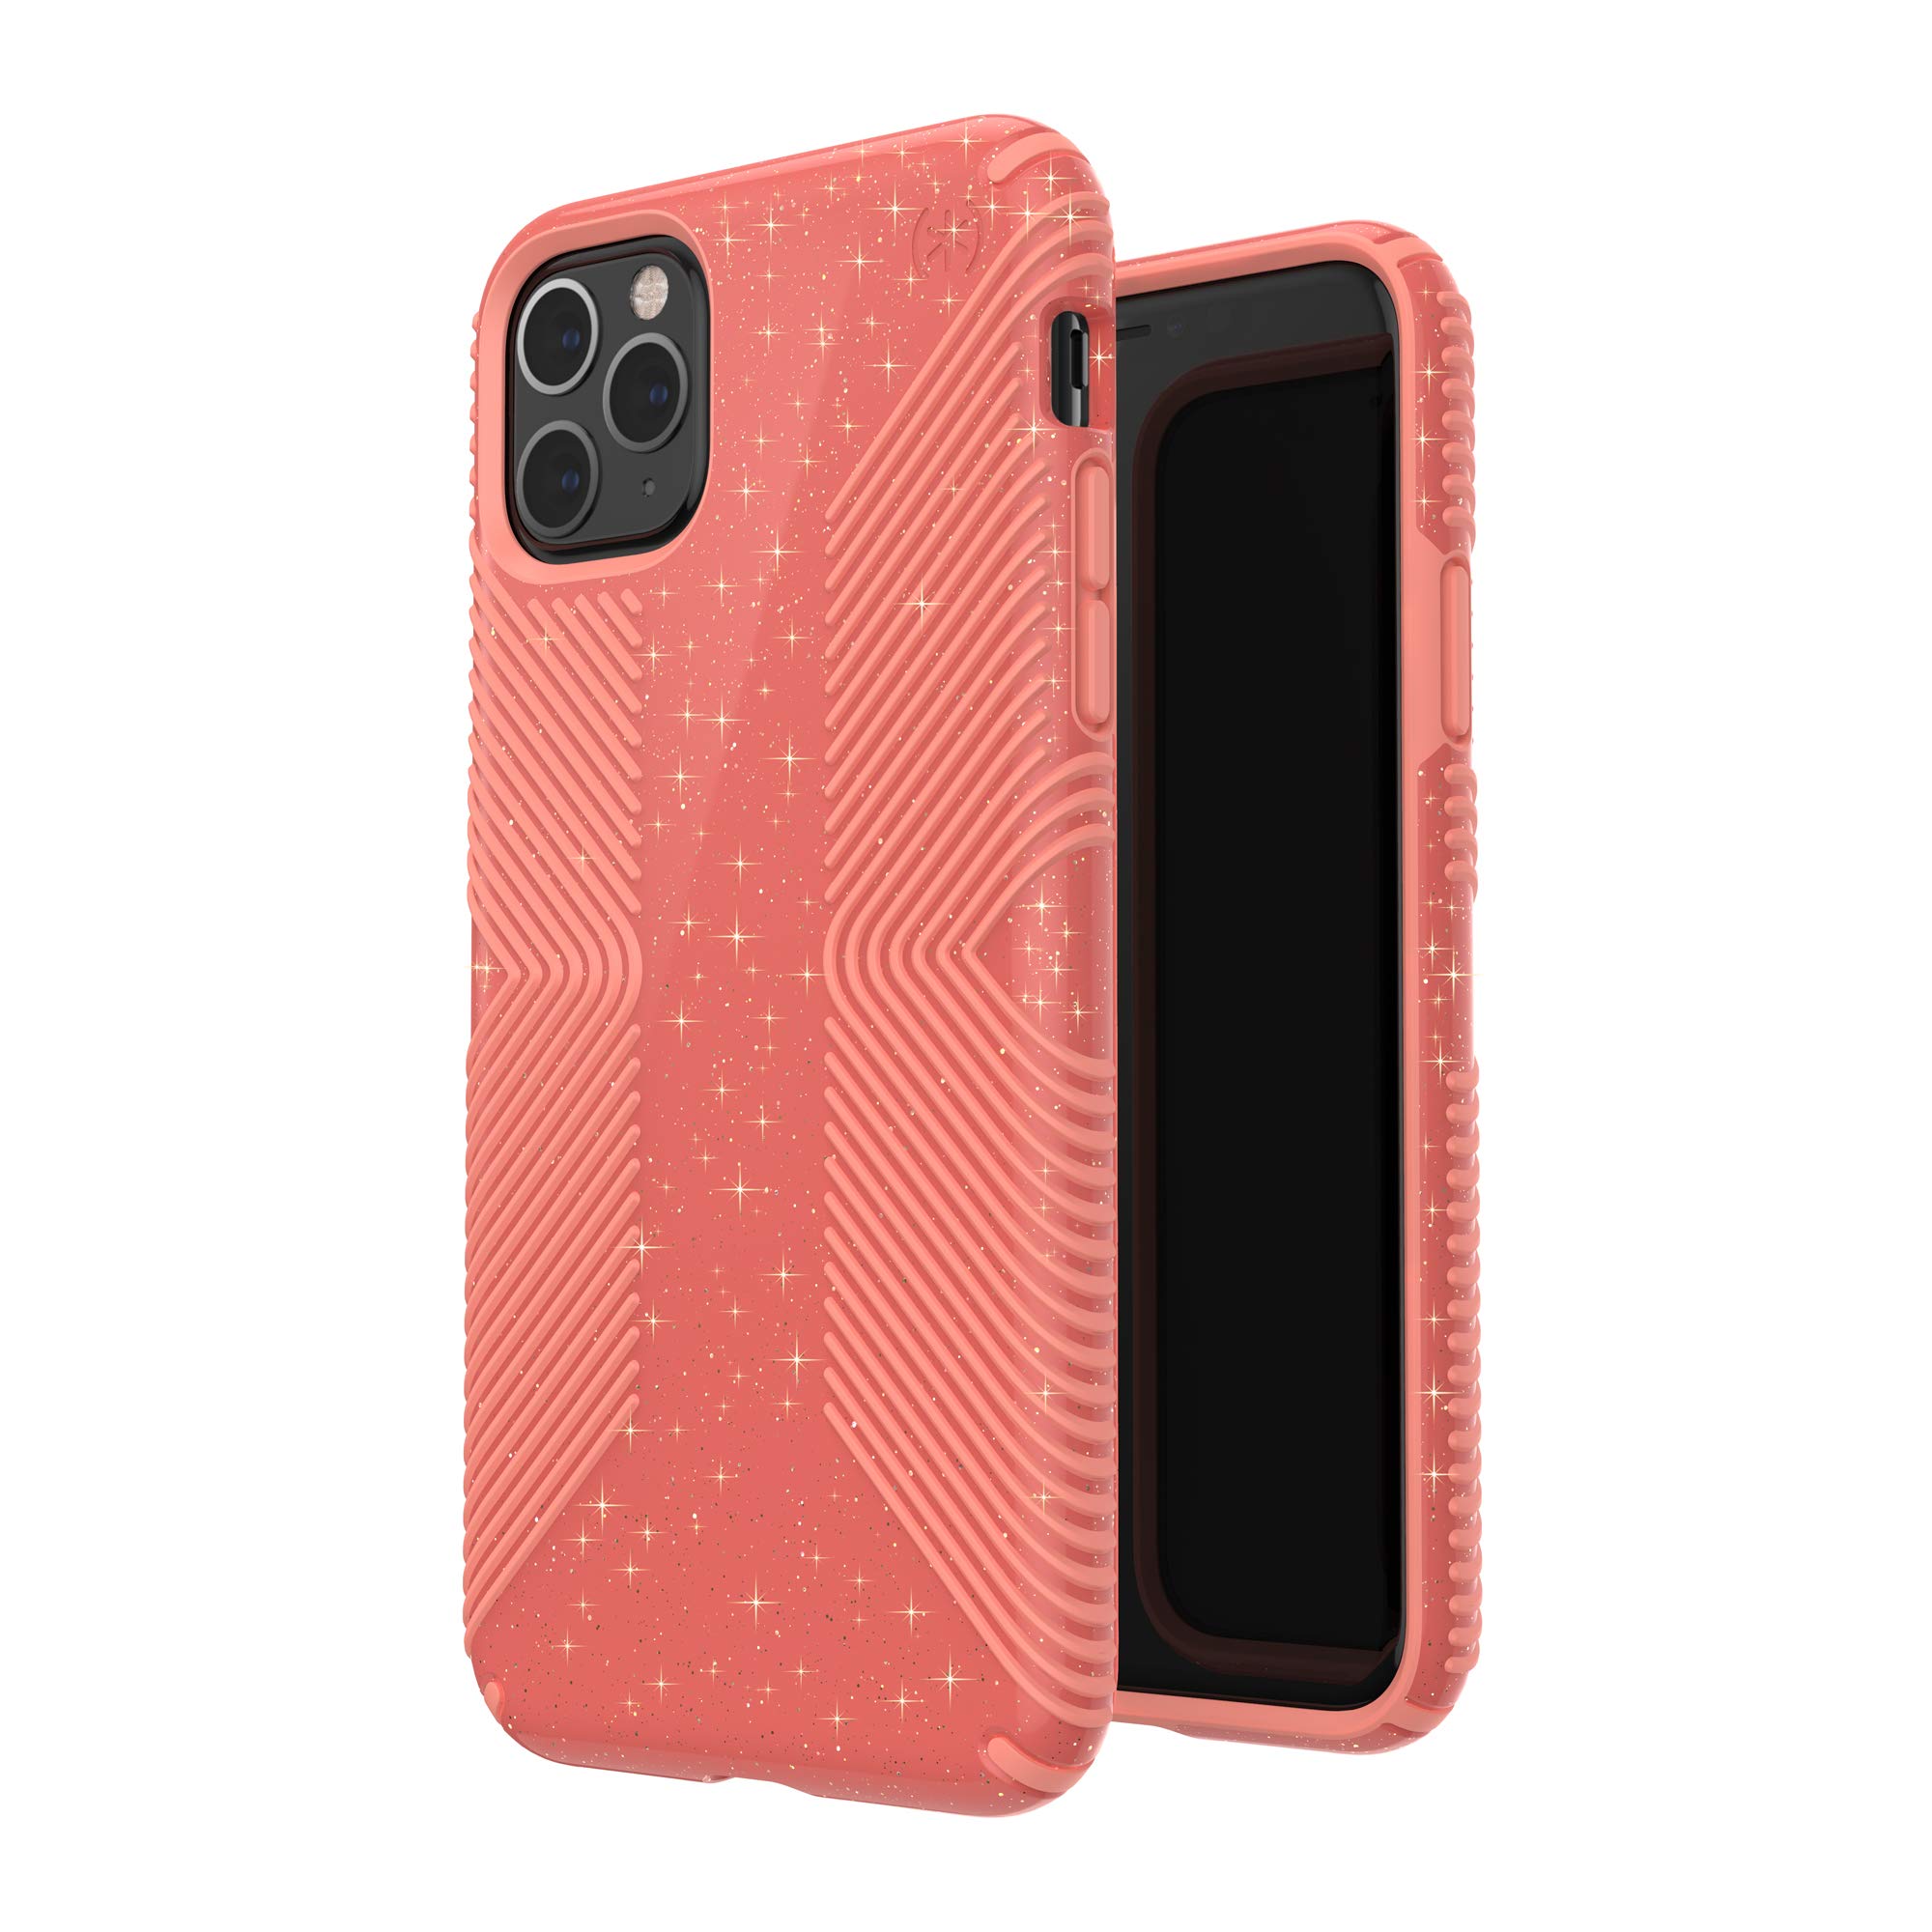 Speck Products Presidio Grip + Glitter iPhone 11 PRO Max Case, Lilypink Glitter/Papaya Pink (130036-8533)